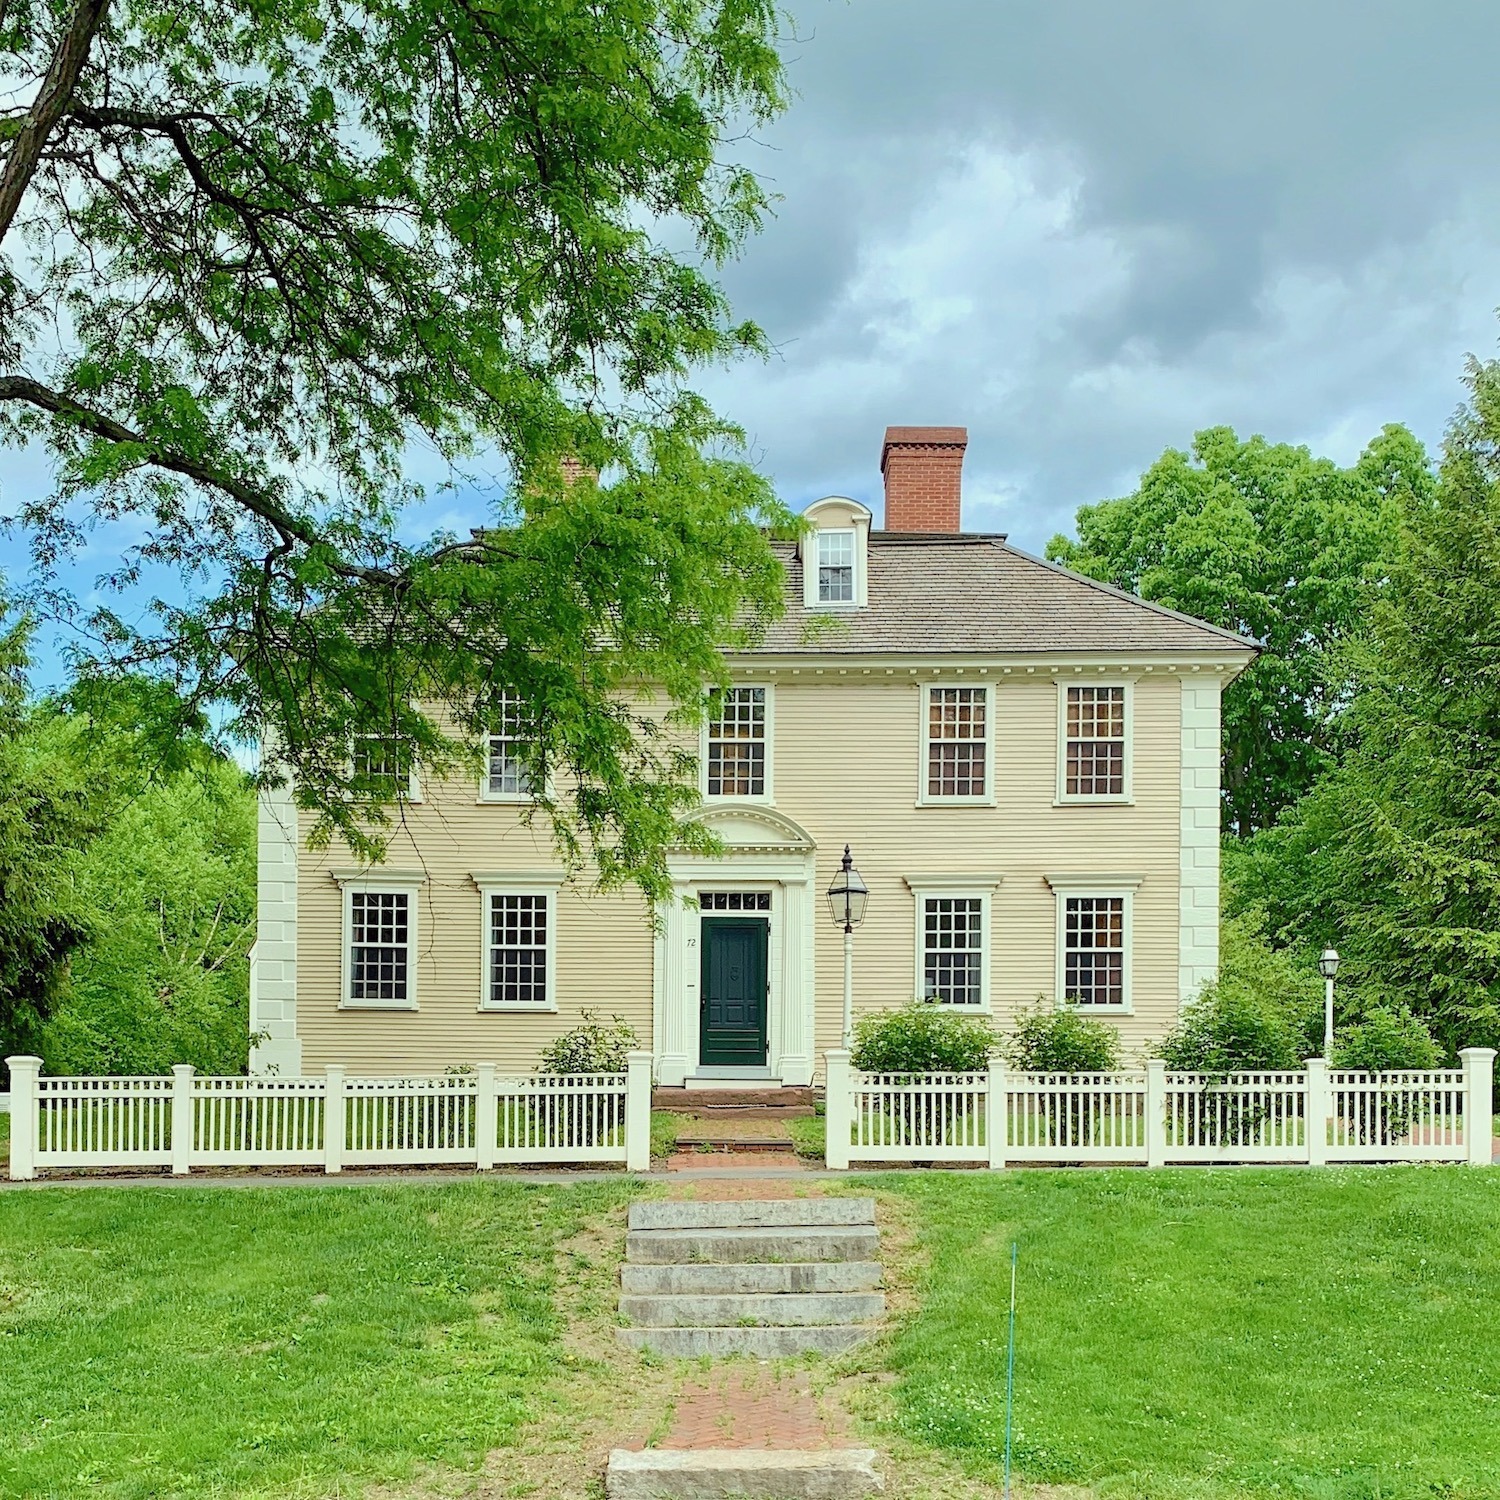 House - historic Deerfield - photo: LBInteriors